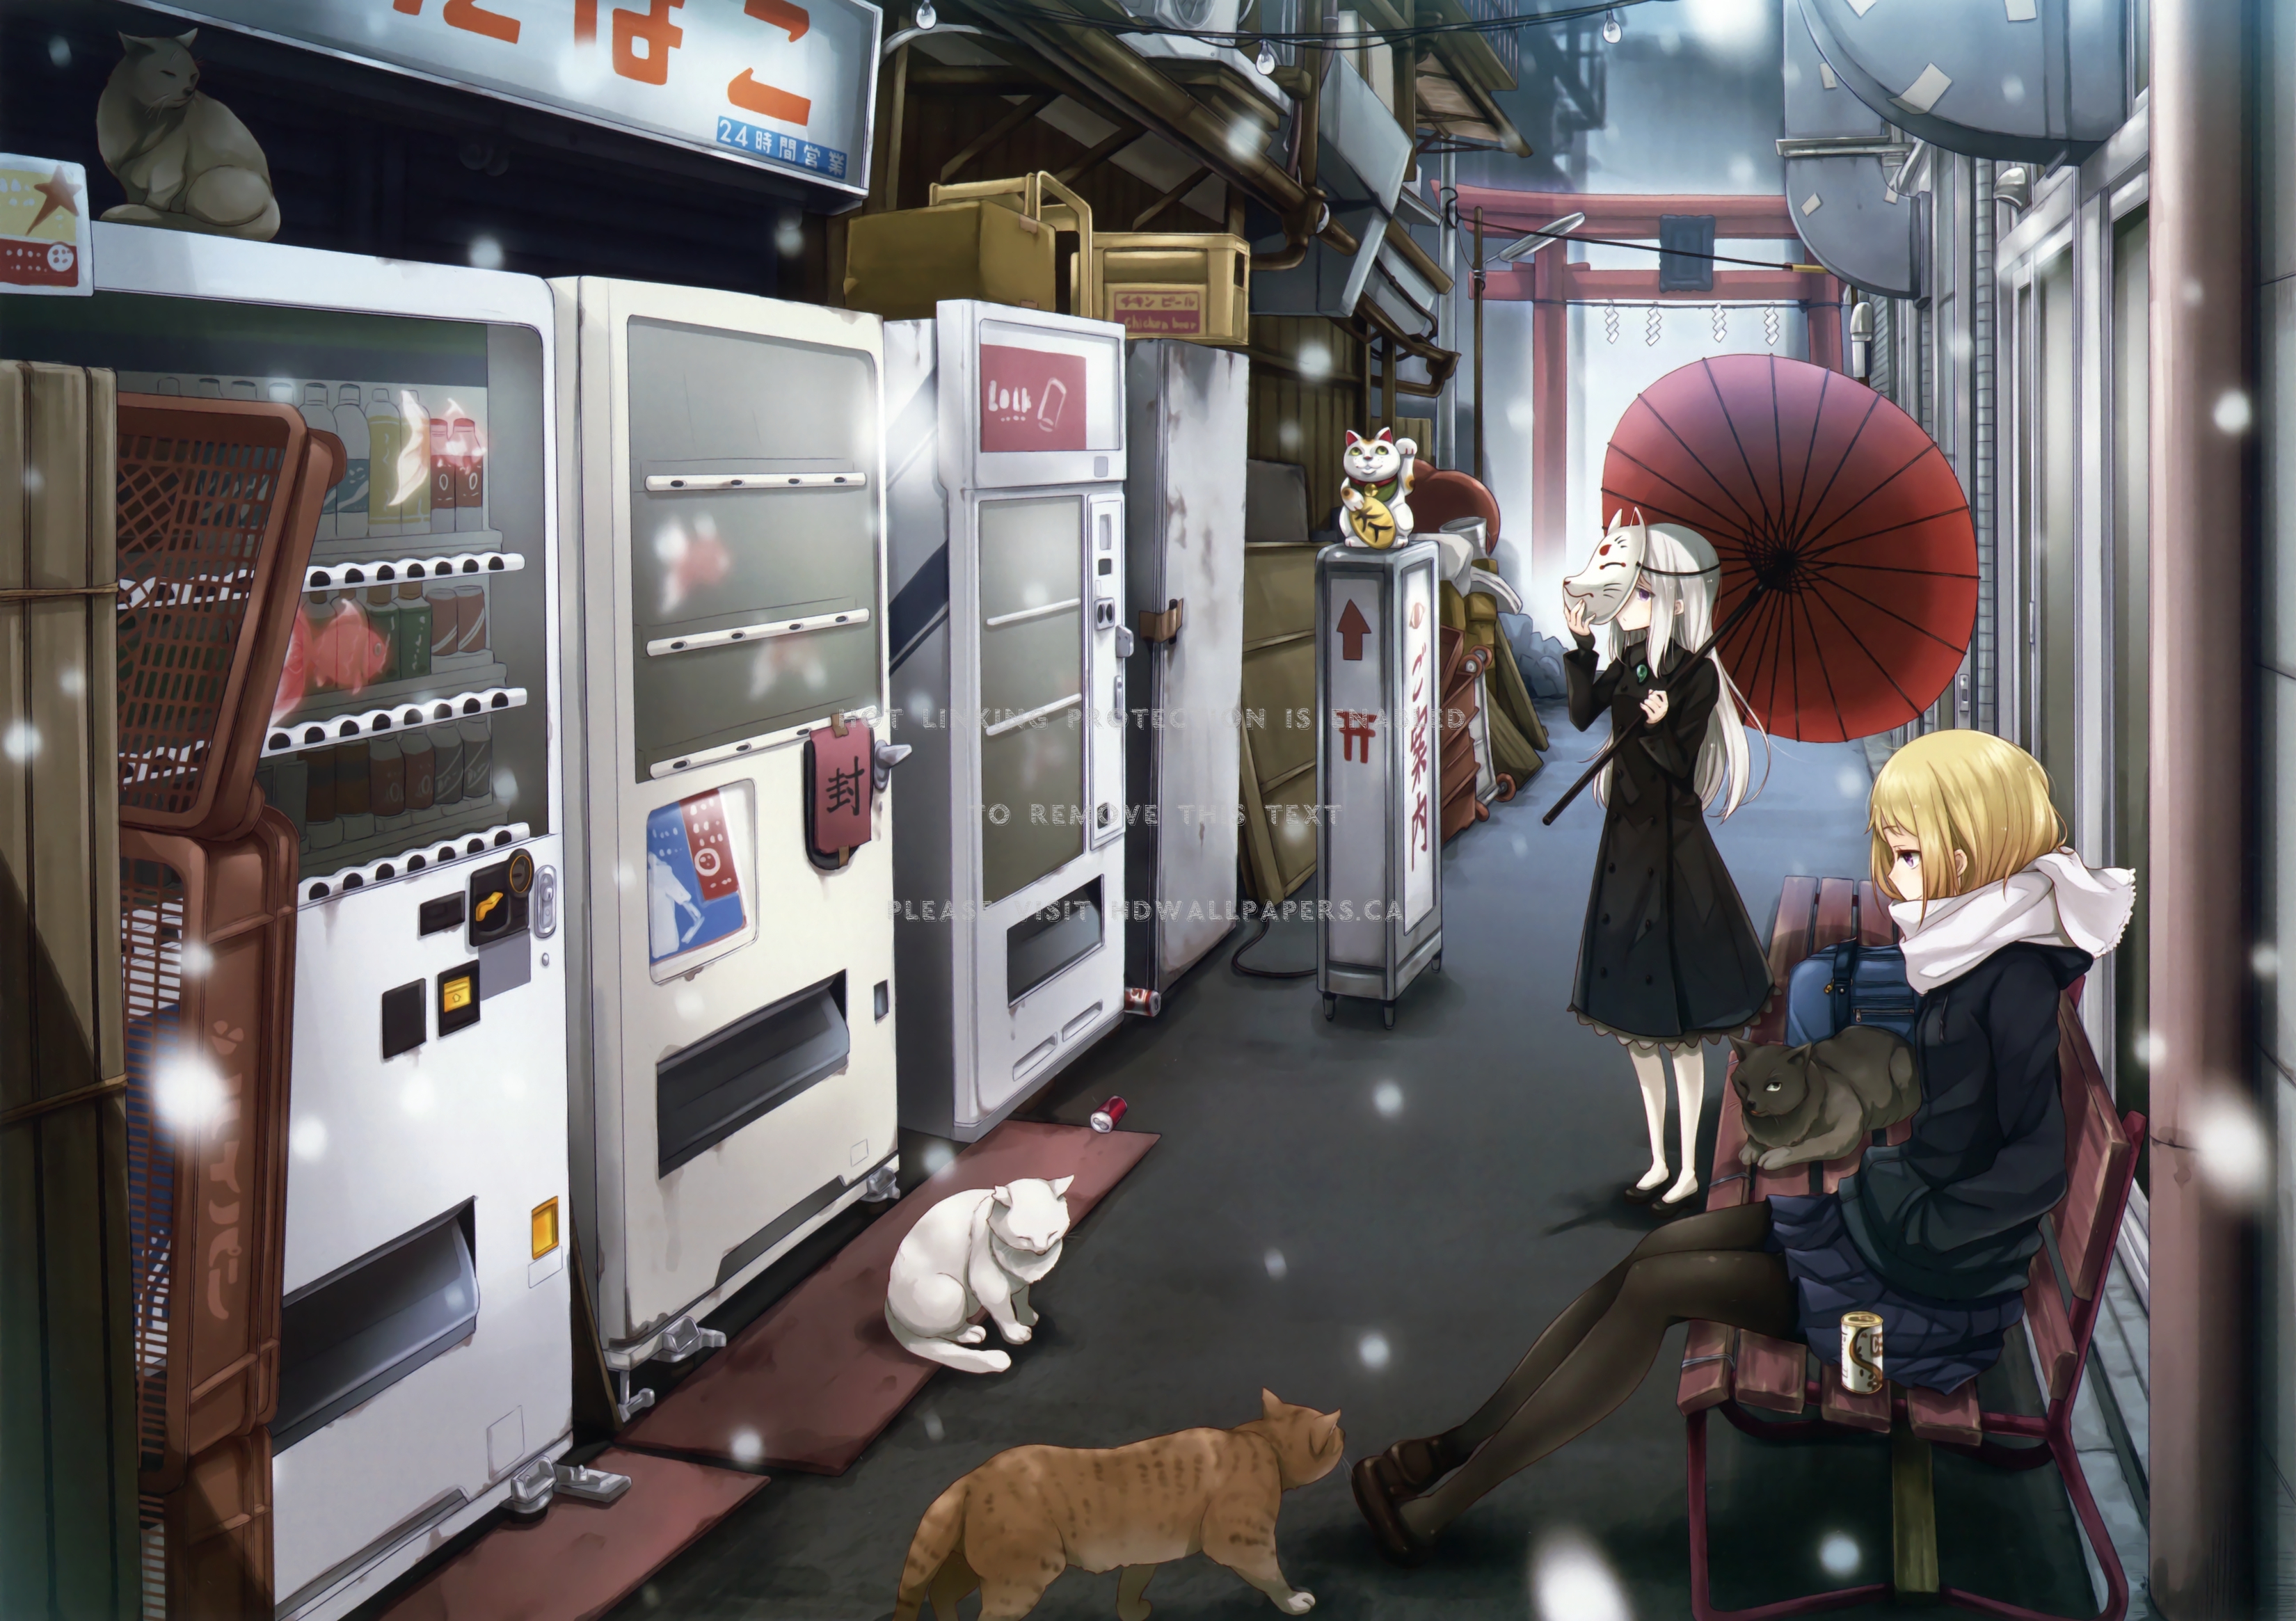 Yen Press Simulpubs Manga About Heroic Vending Machine